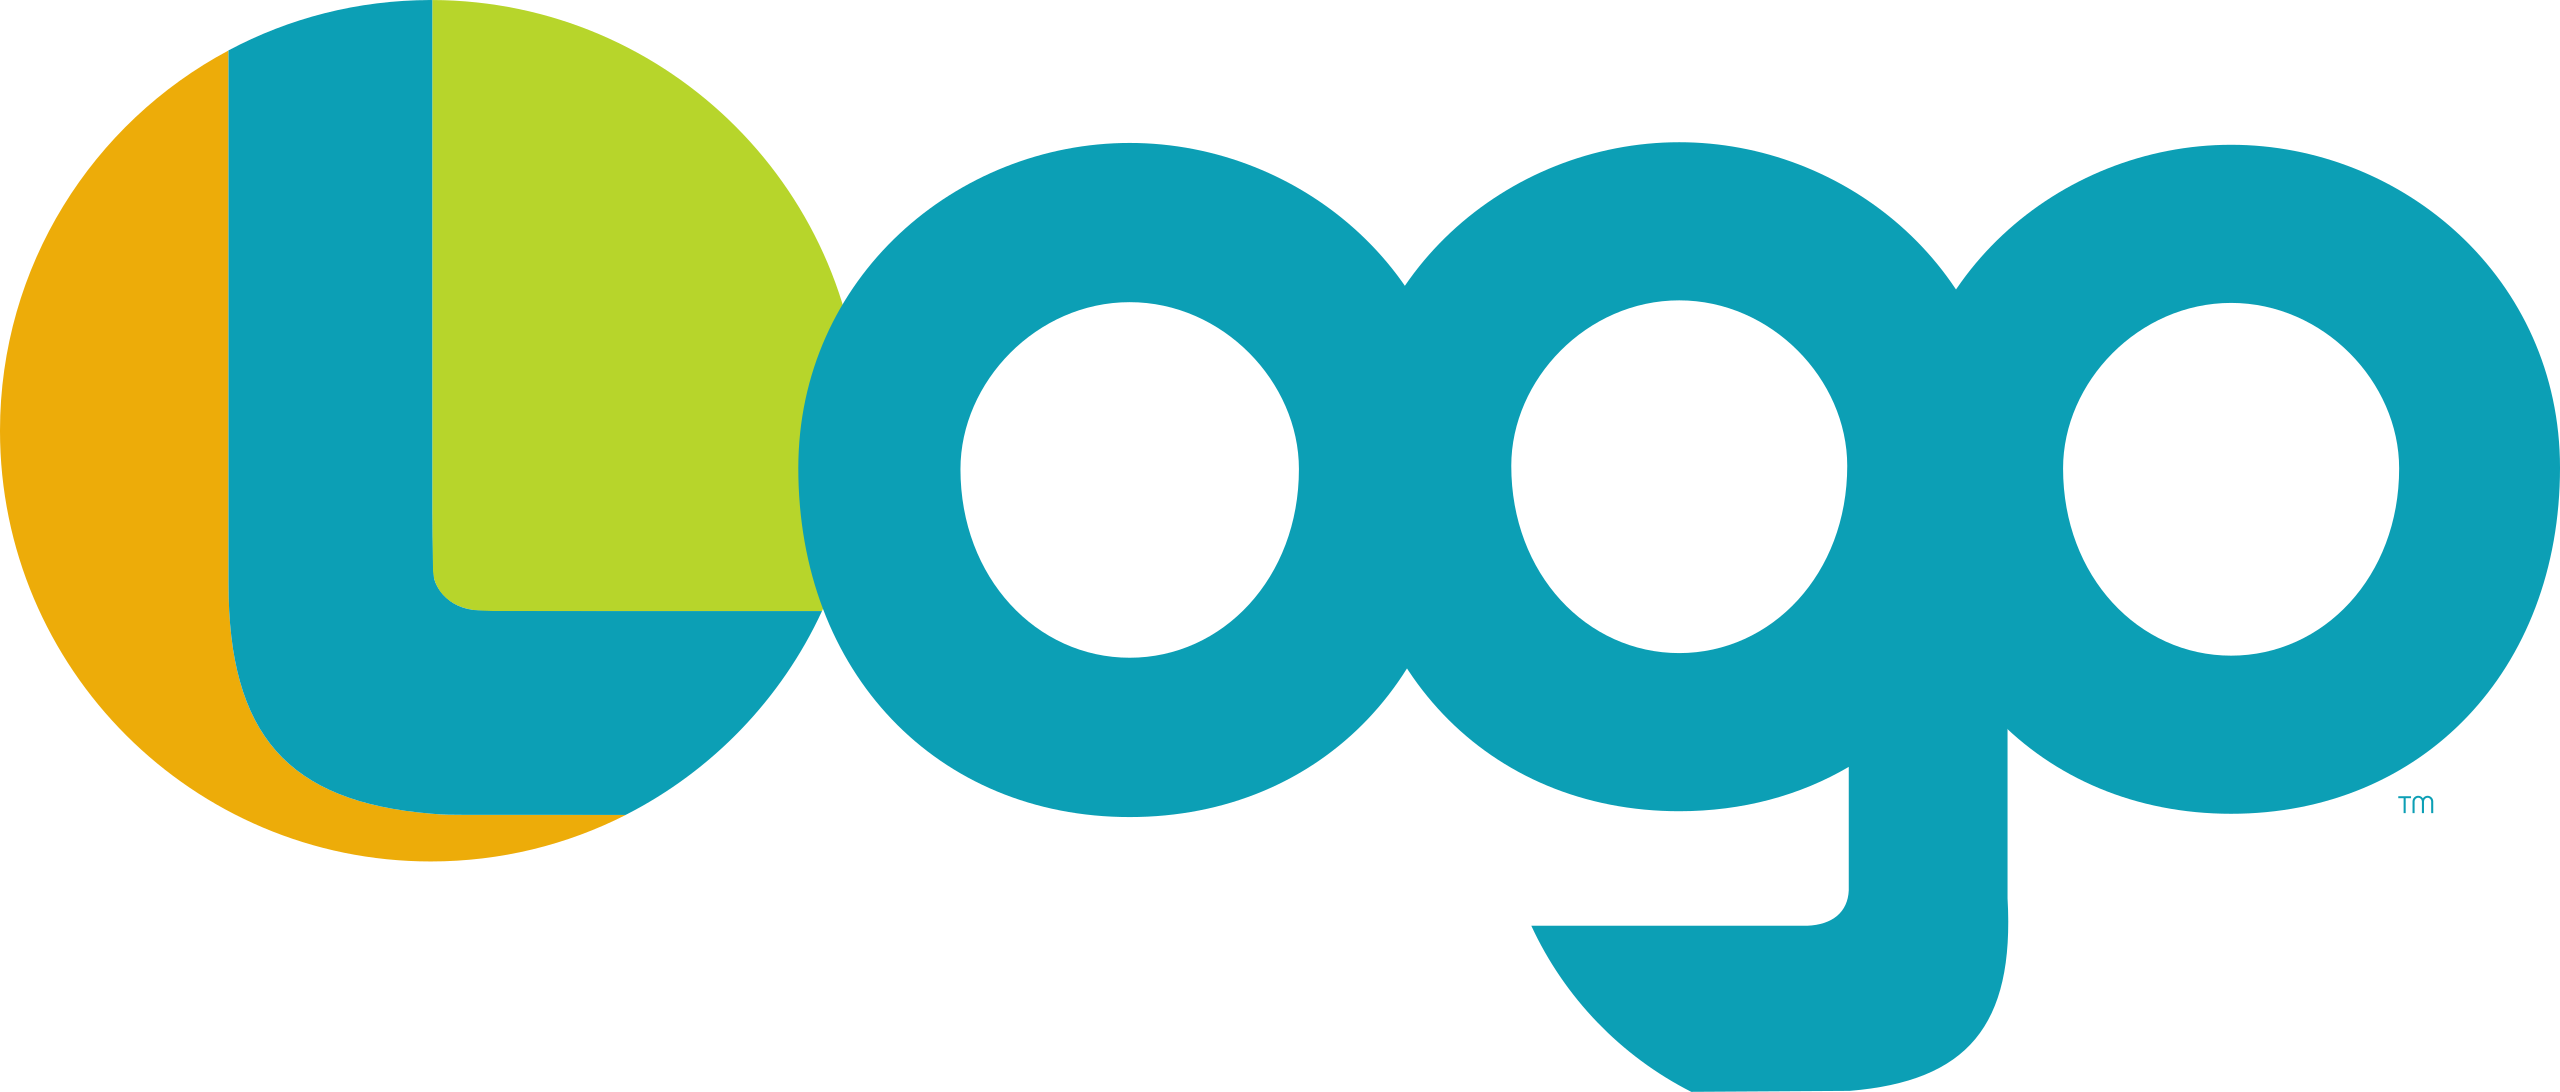 File:O Jogo Logotipo.jpg - Wikimedia Commons